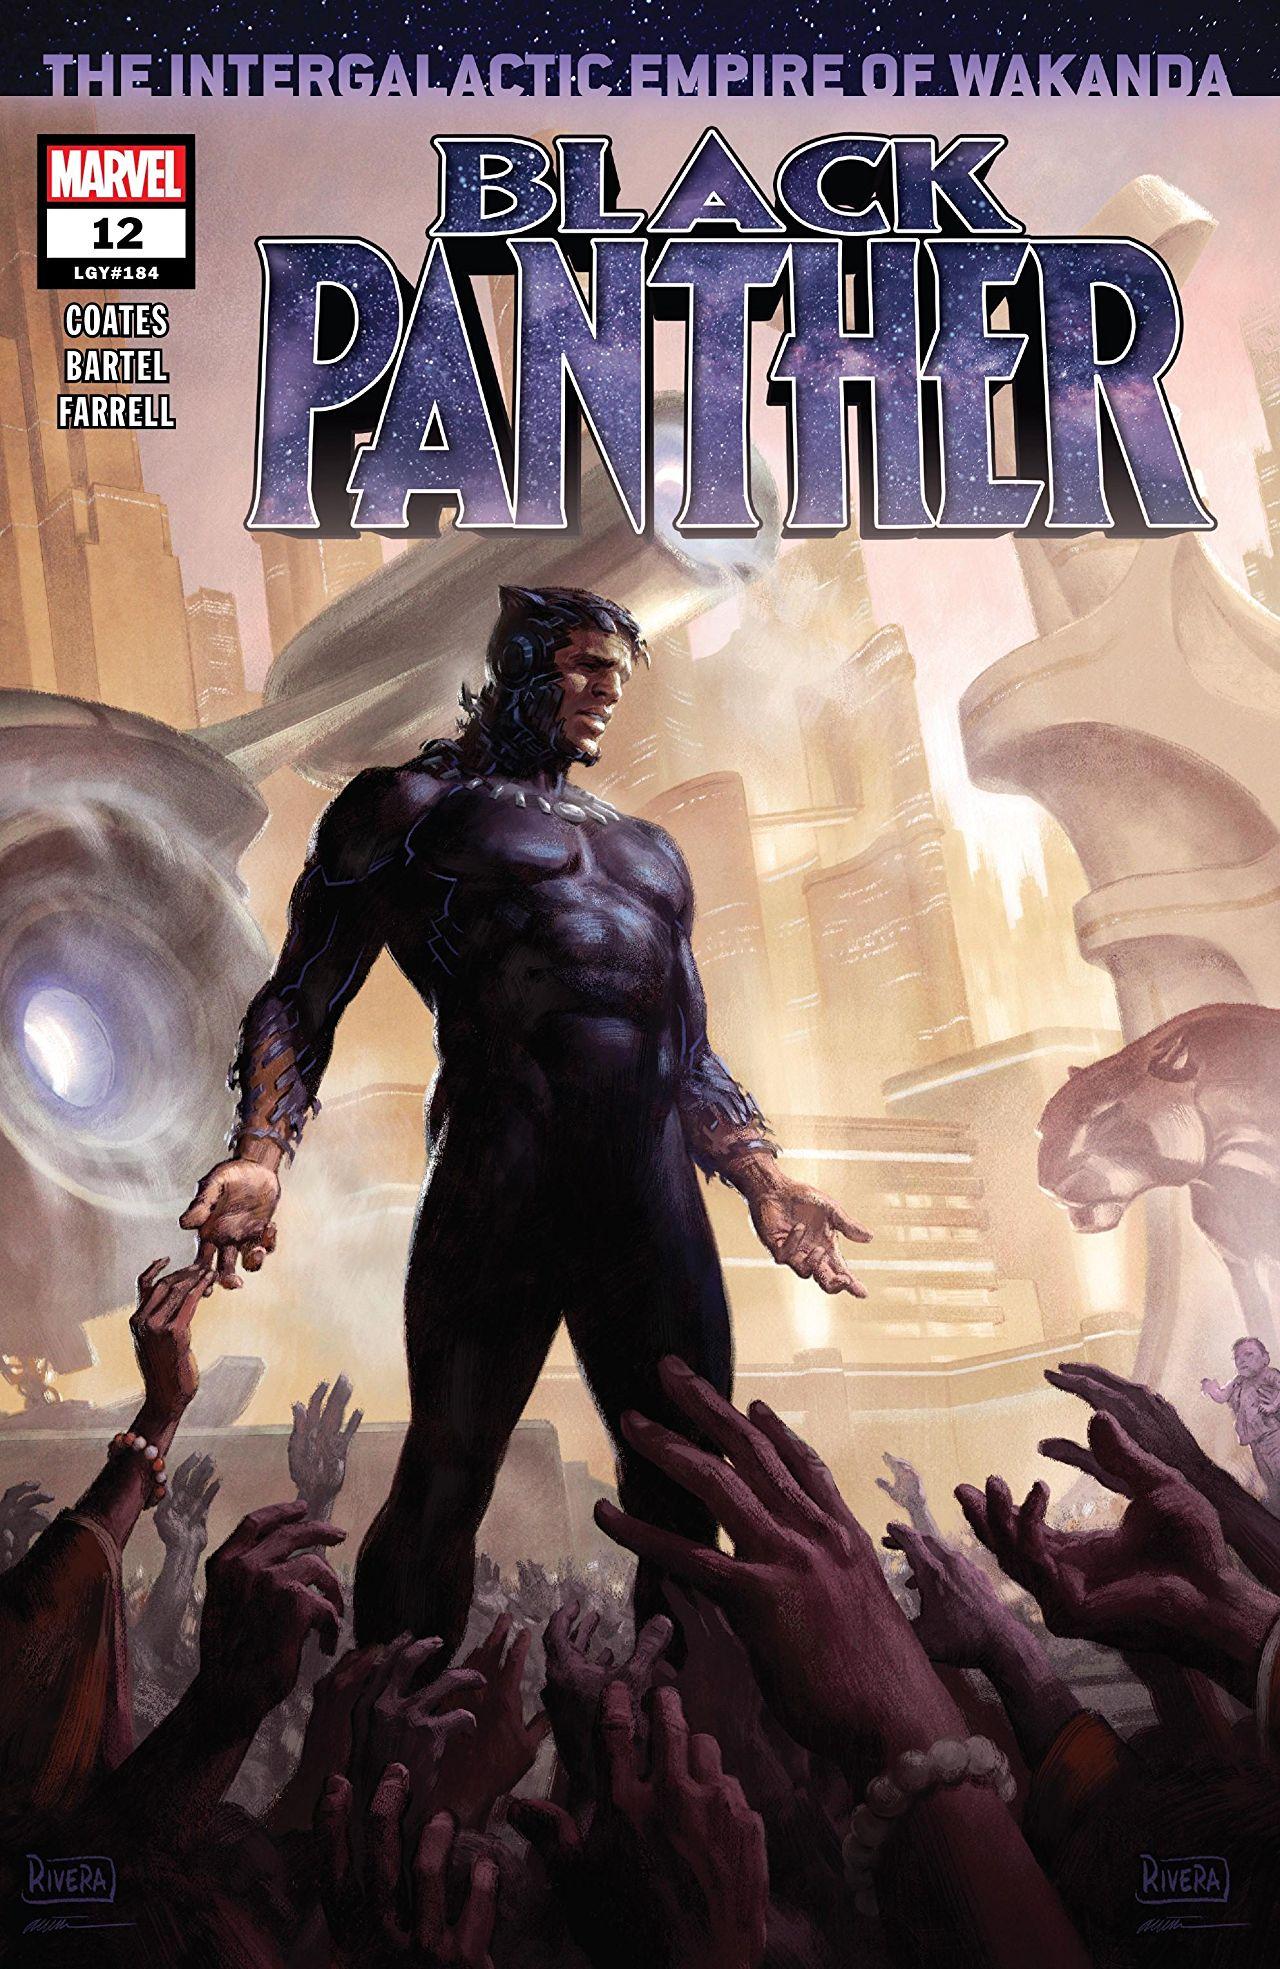 Black Panther Vol. 7 #12